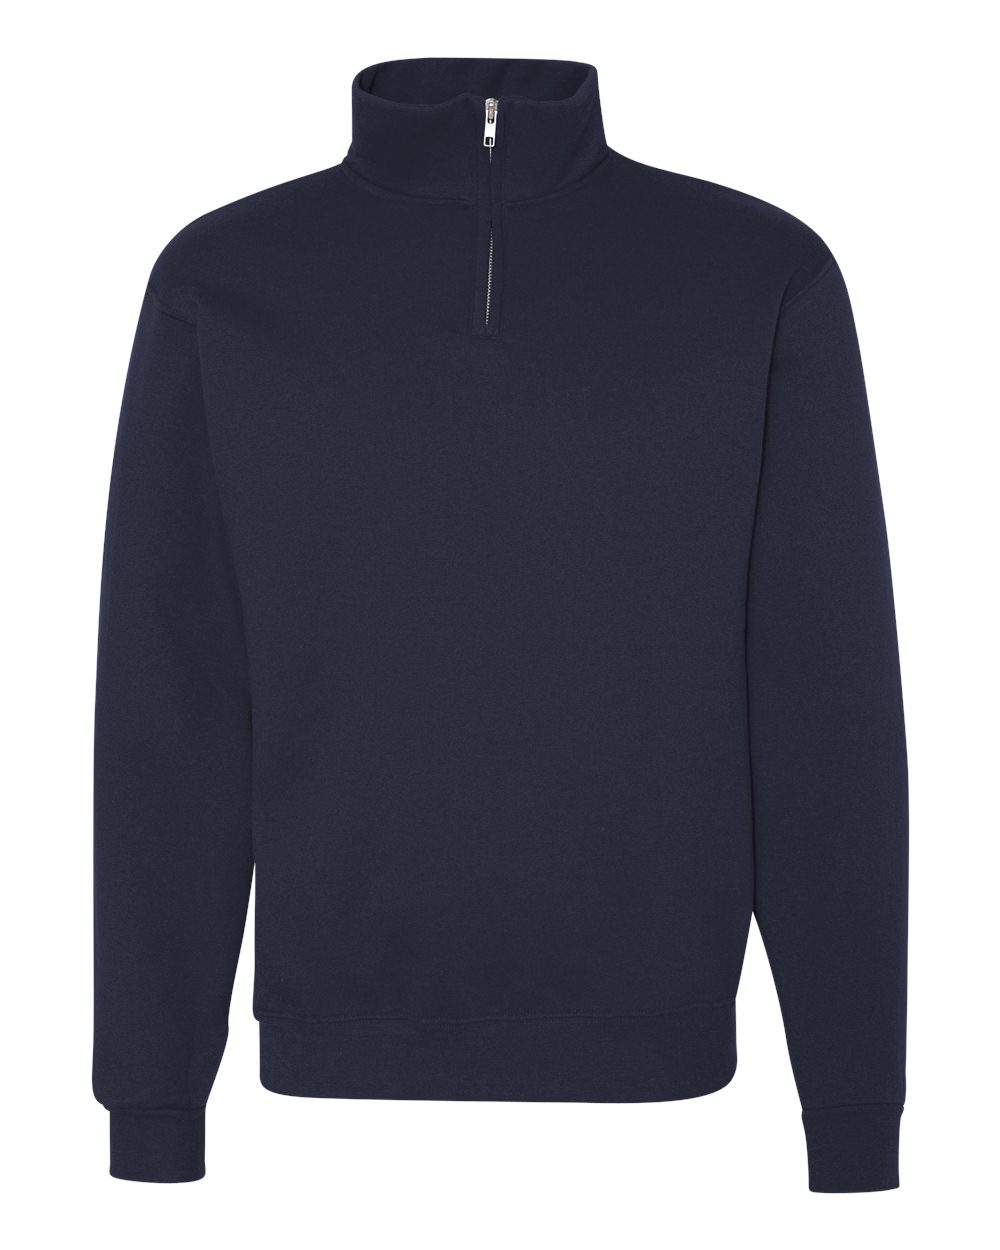 JERZEES 995M - 8 Ounce 50/50 Cadet Collar Sweatshirt $15.01 - Sweatshirts